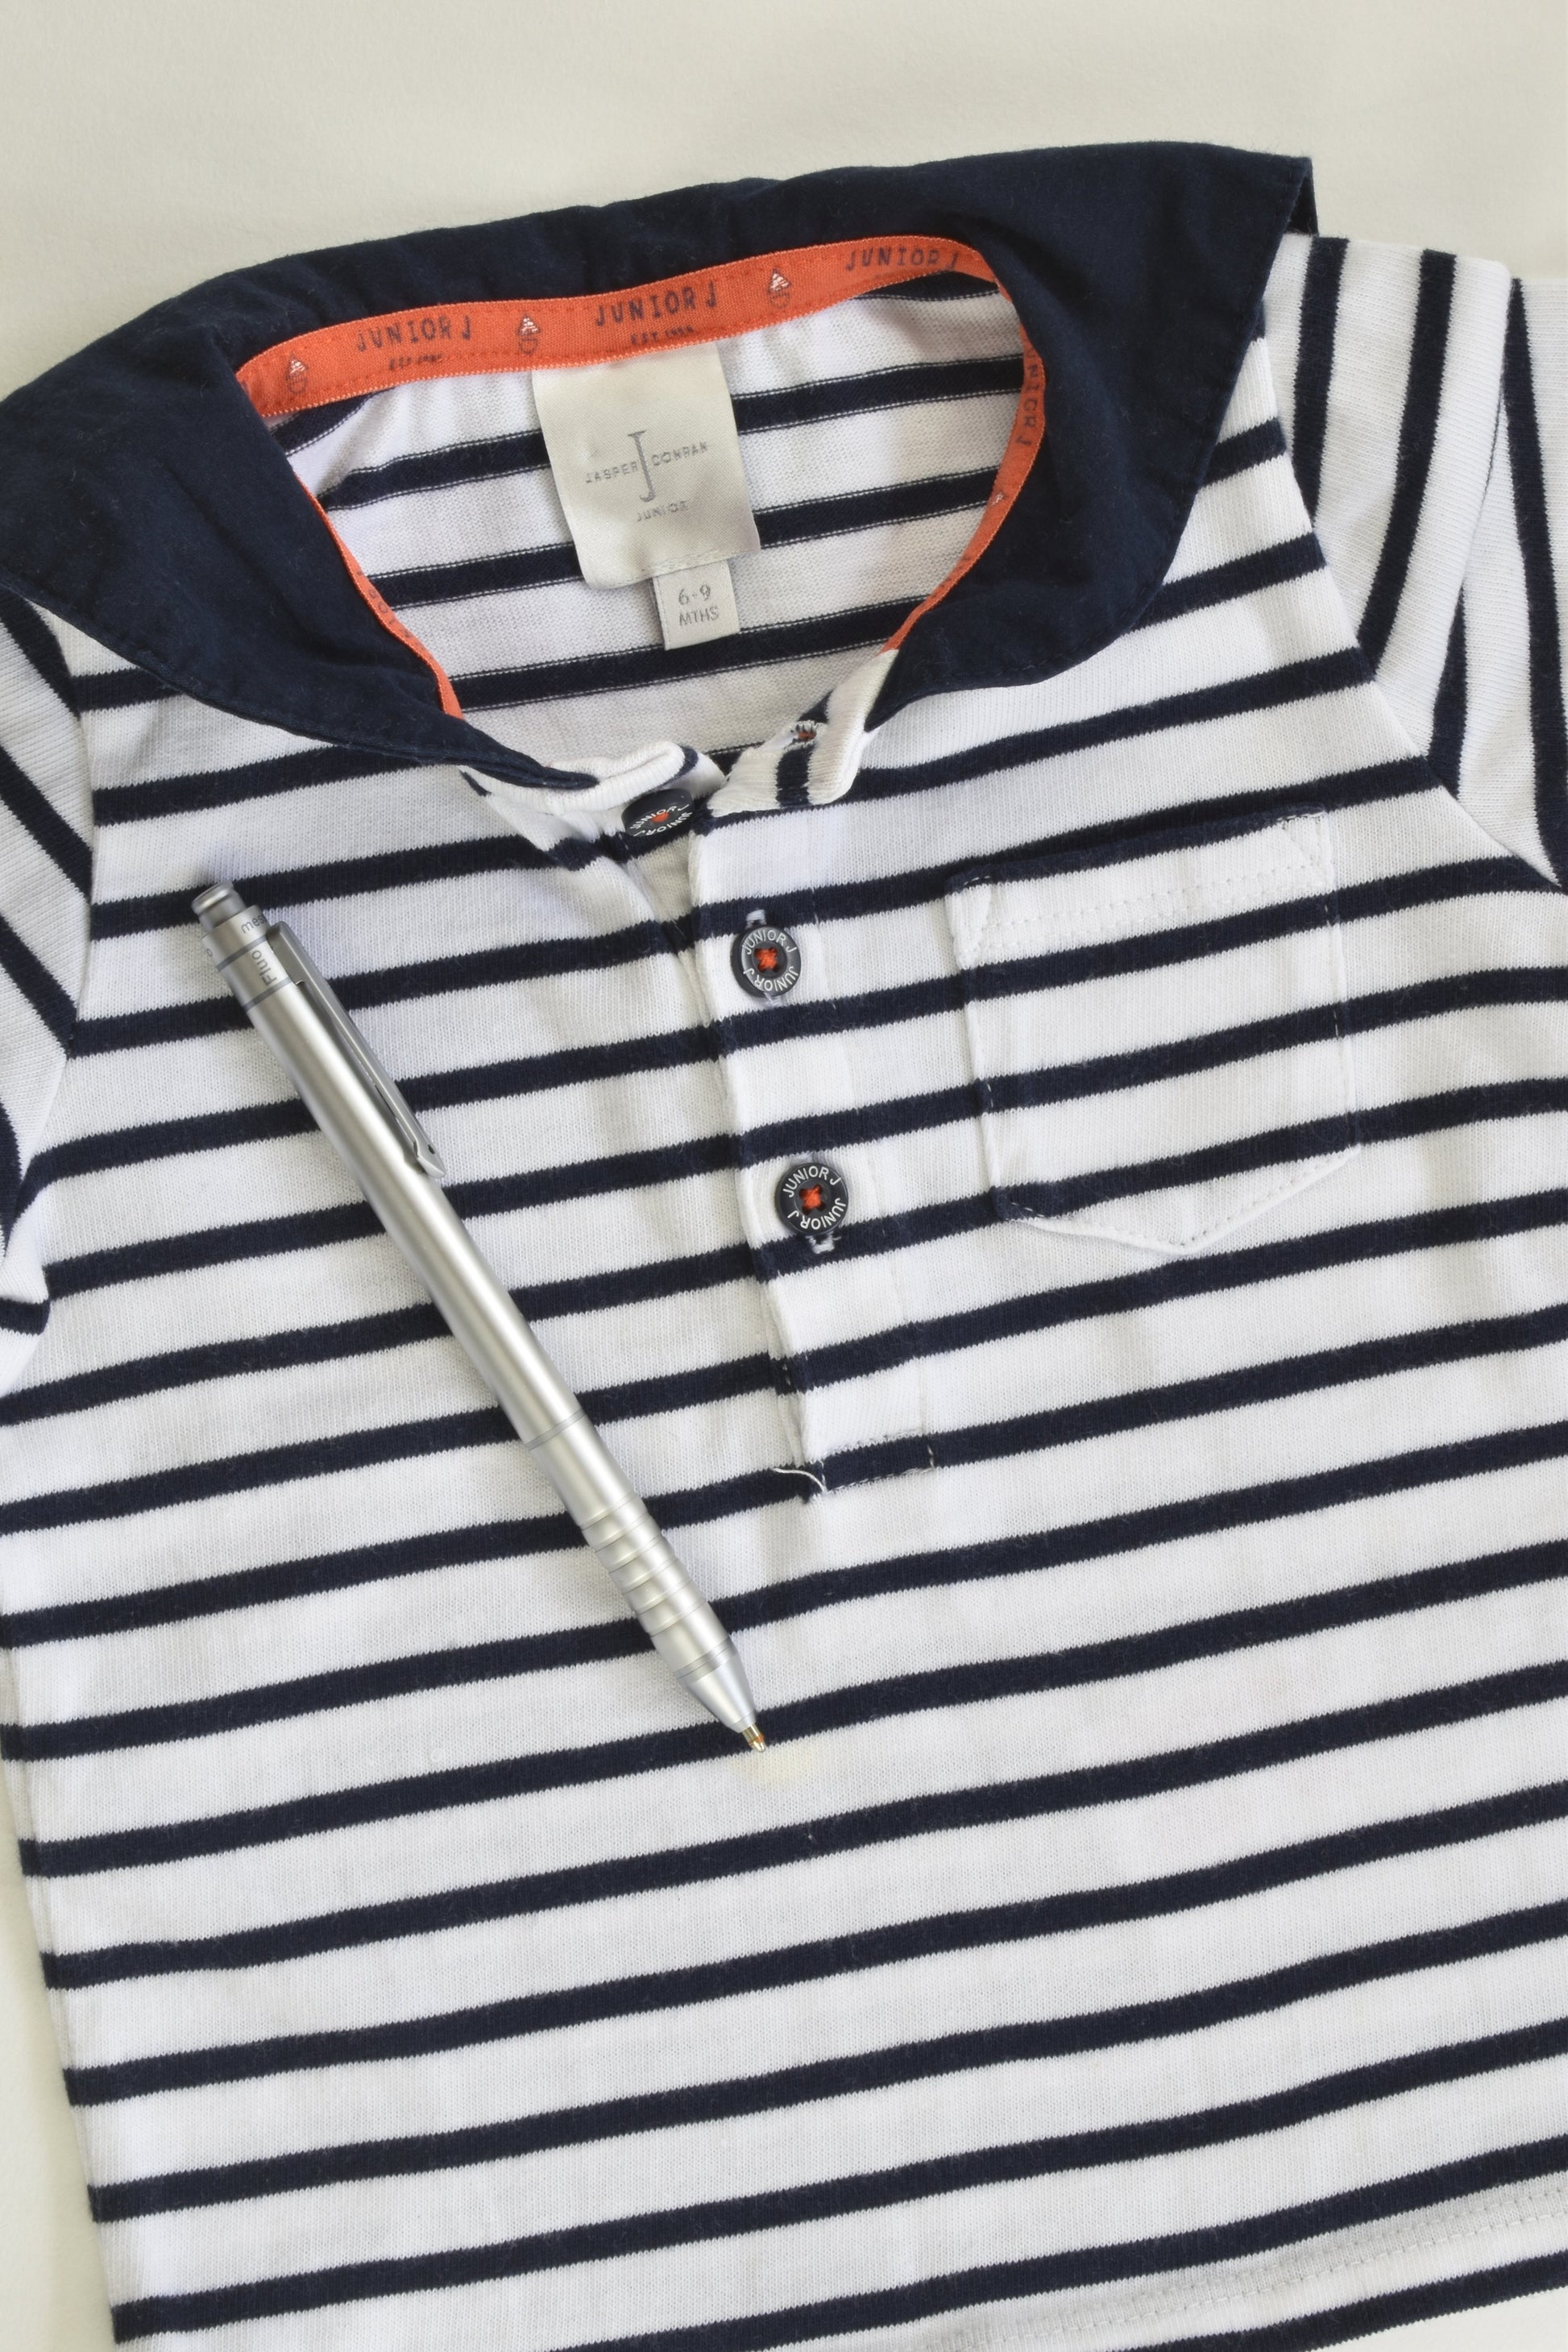 Jasper Conran Junior Size 00 Nautical T-shirt